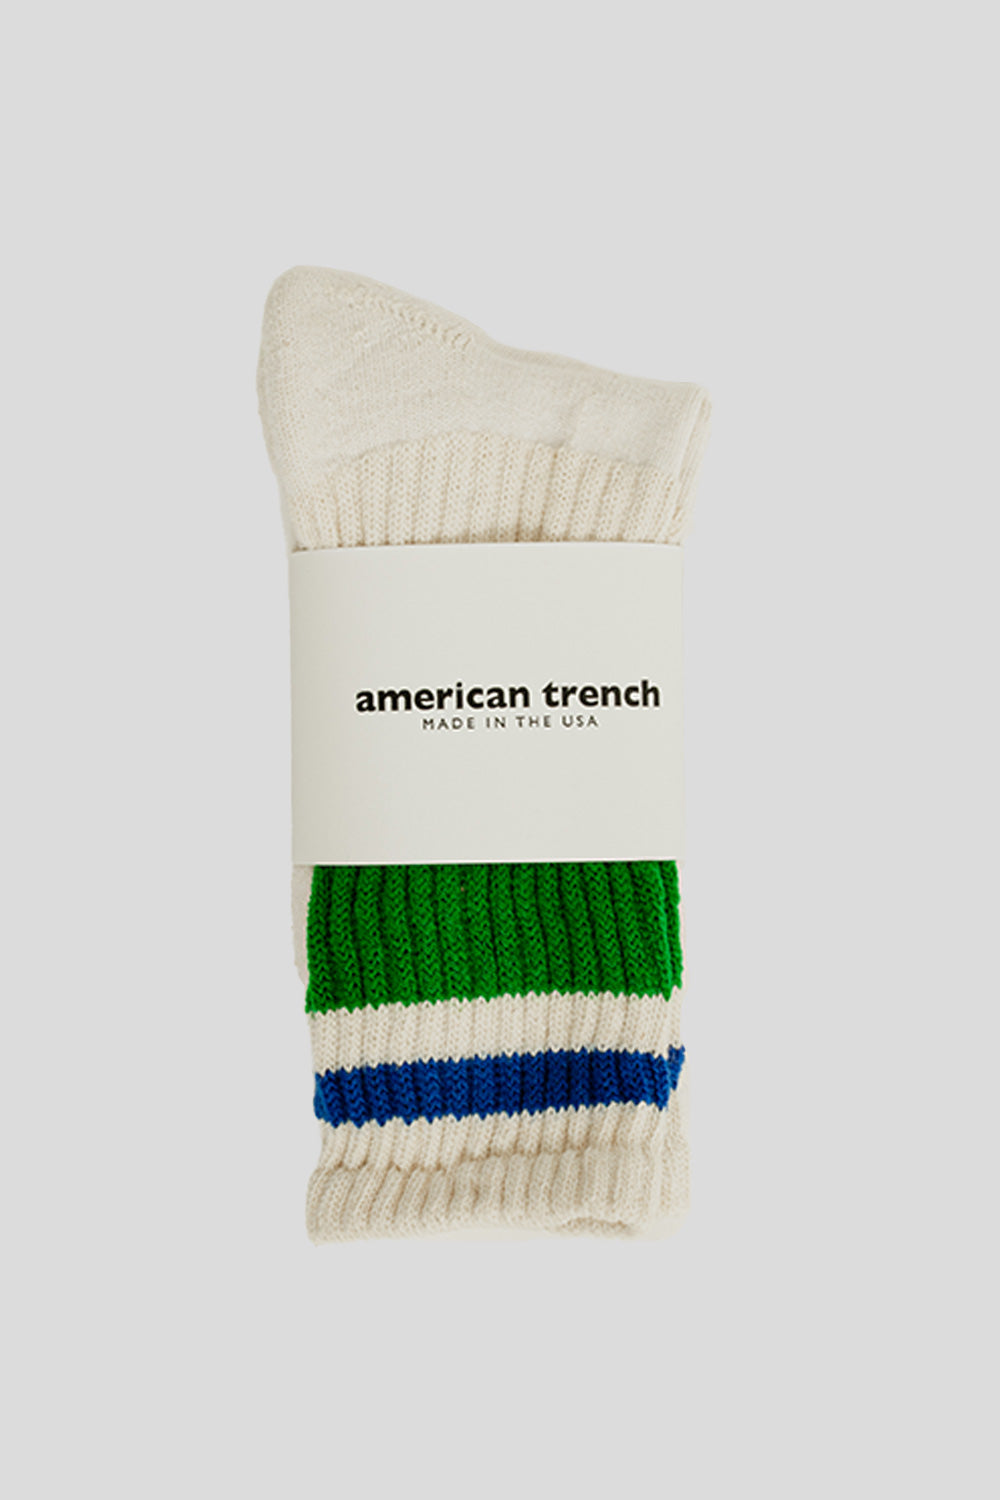 american-trench-retro-stripes-kelly-green-royal